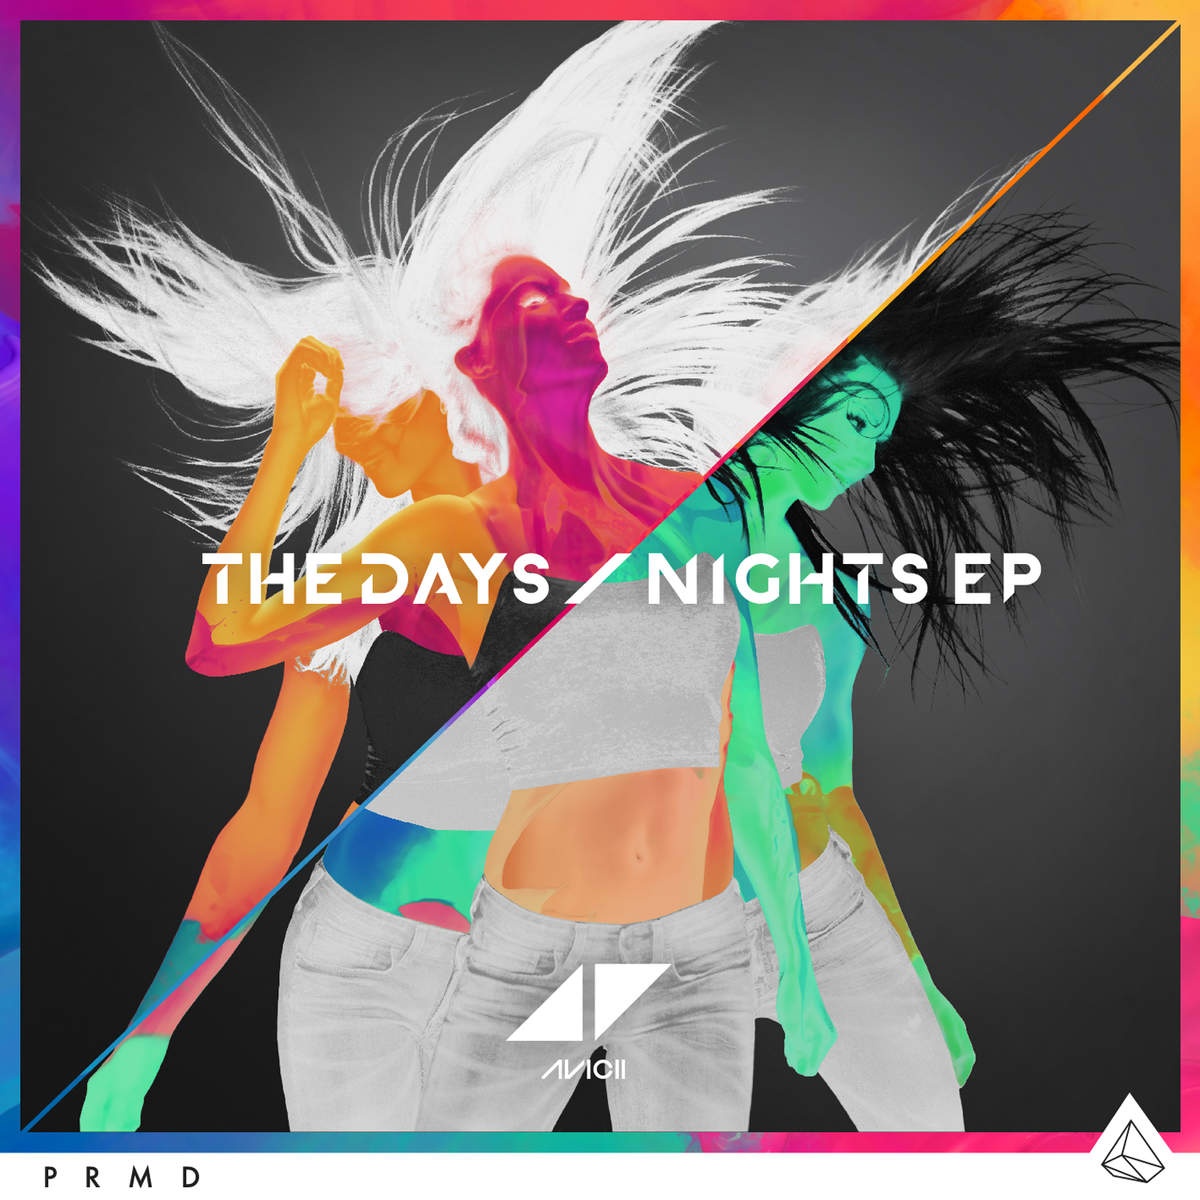 The Nights (Moogy Remix)